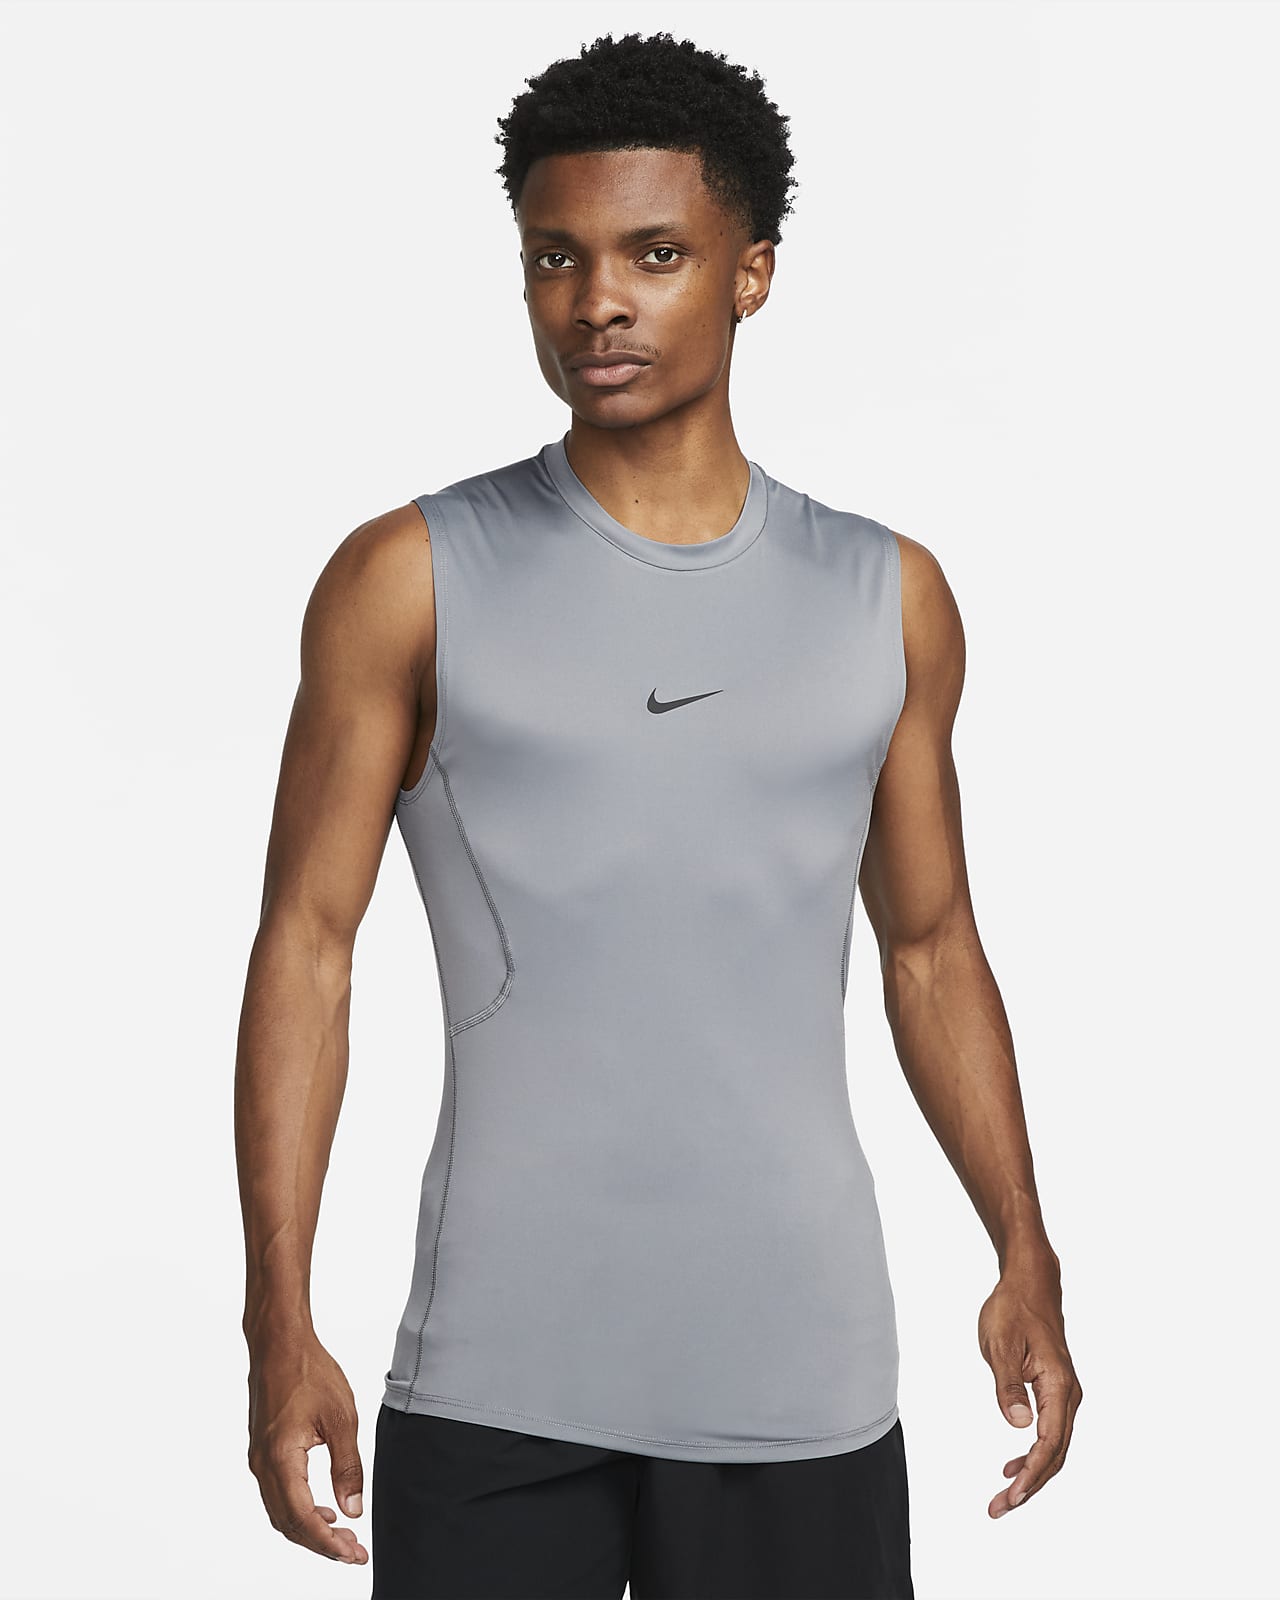 Nike Nike x NBA Compression Shirt